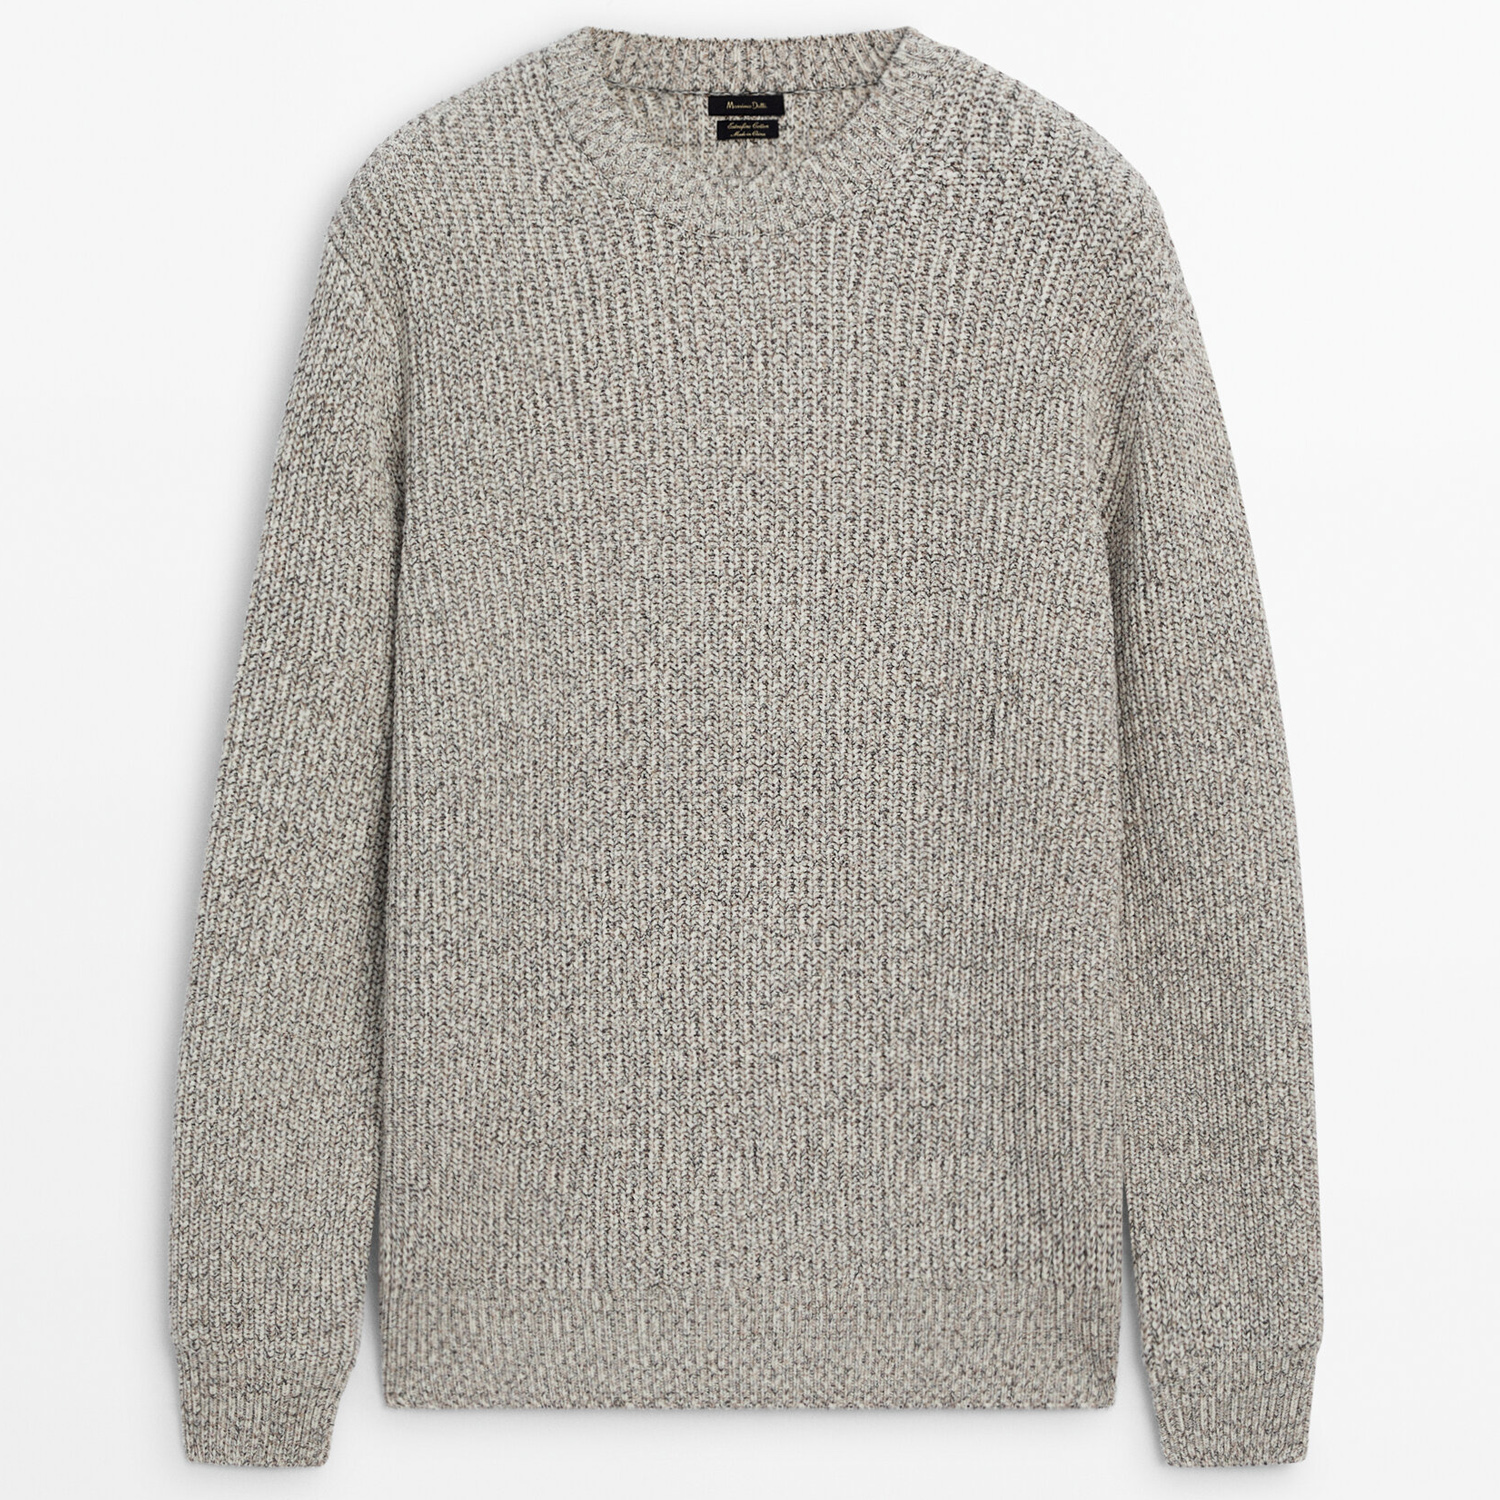 Свитер Massimo Dutti Cotton Blend Knit, кремовый свитер massimo dutti cable knit кремовый